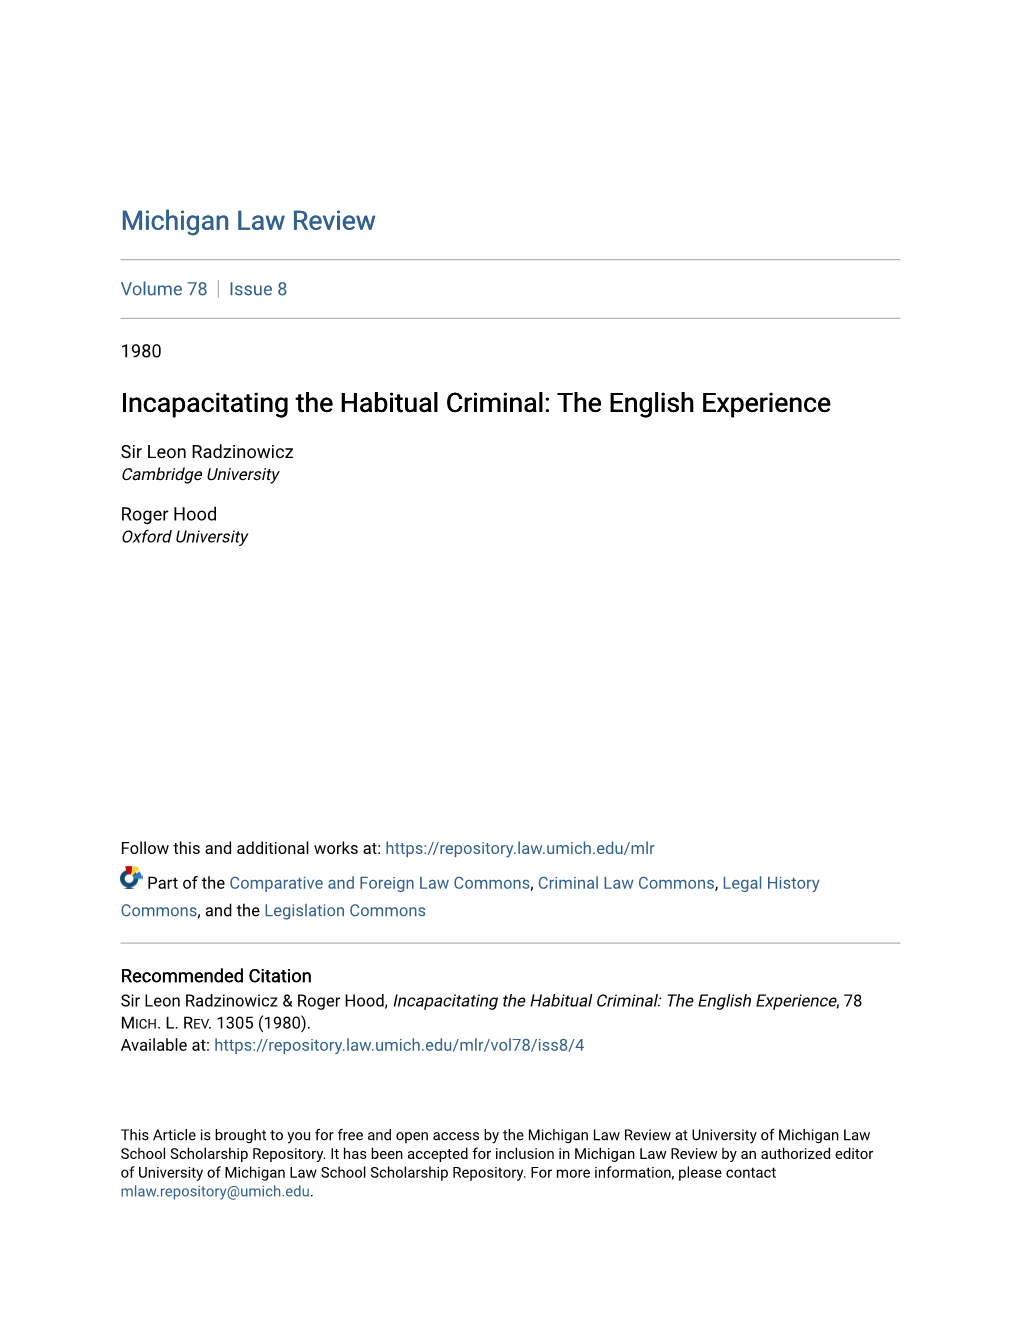 Incapacitating the Habitual Criminal: the English Experience